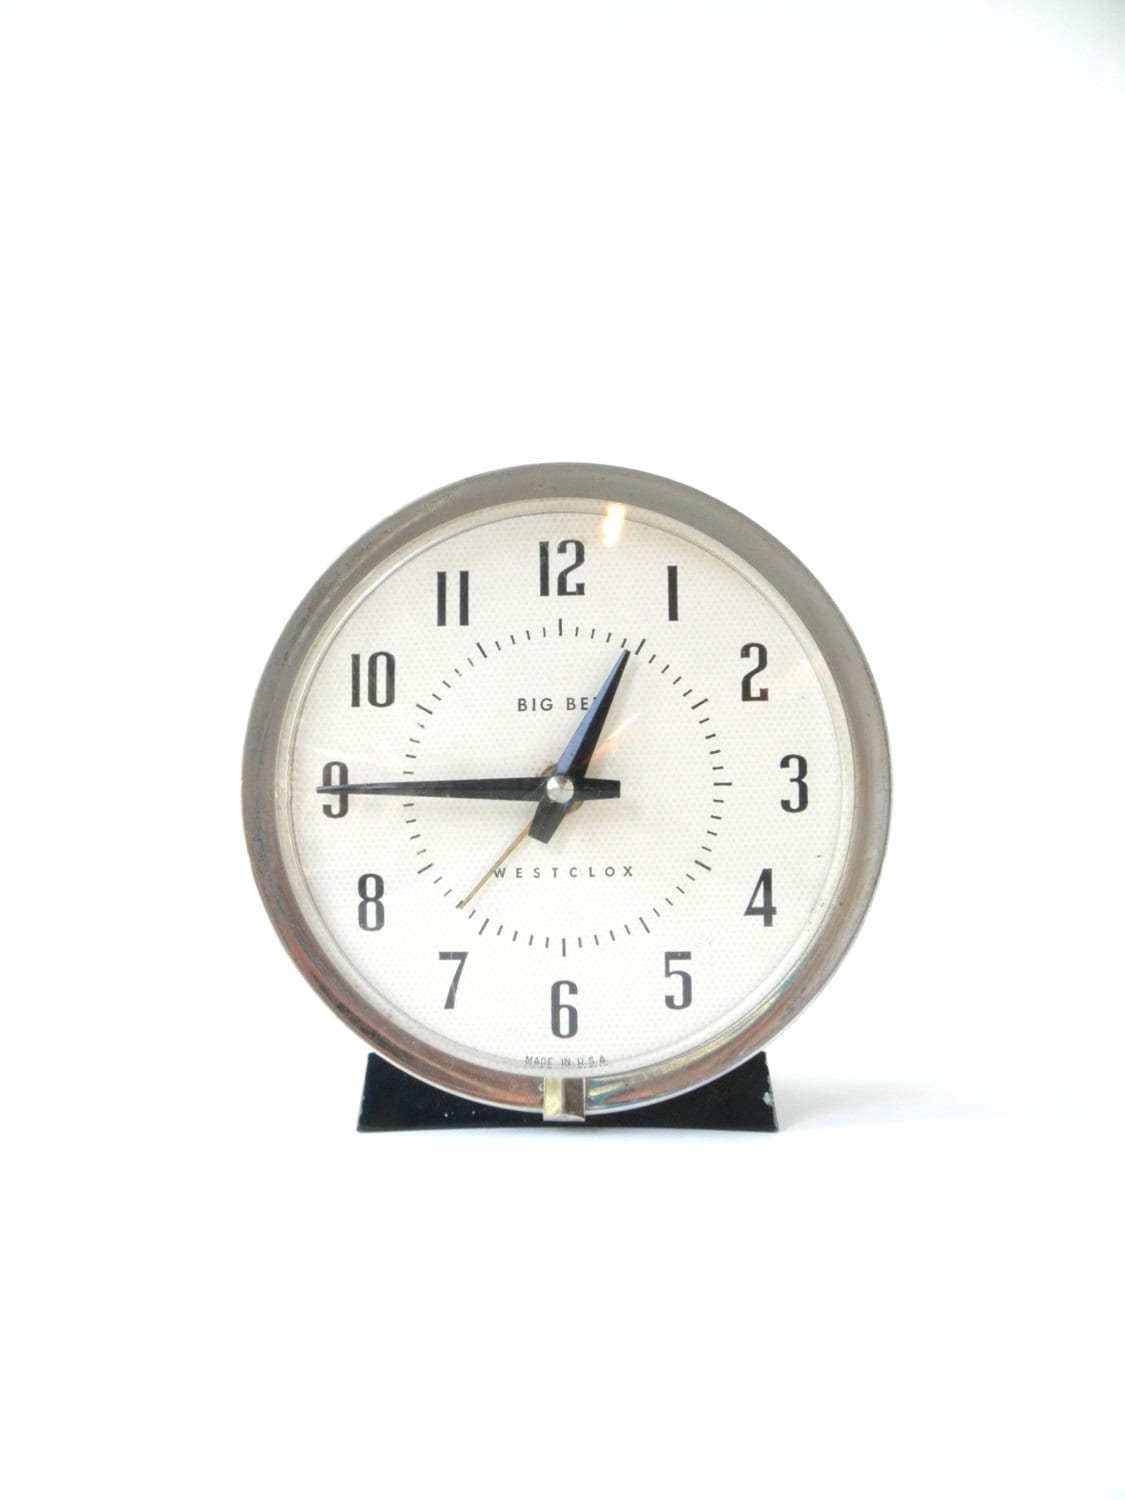 Vintage Westclox Alarm Clock 15